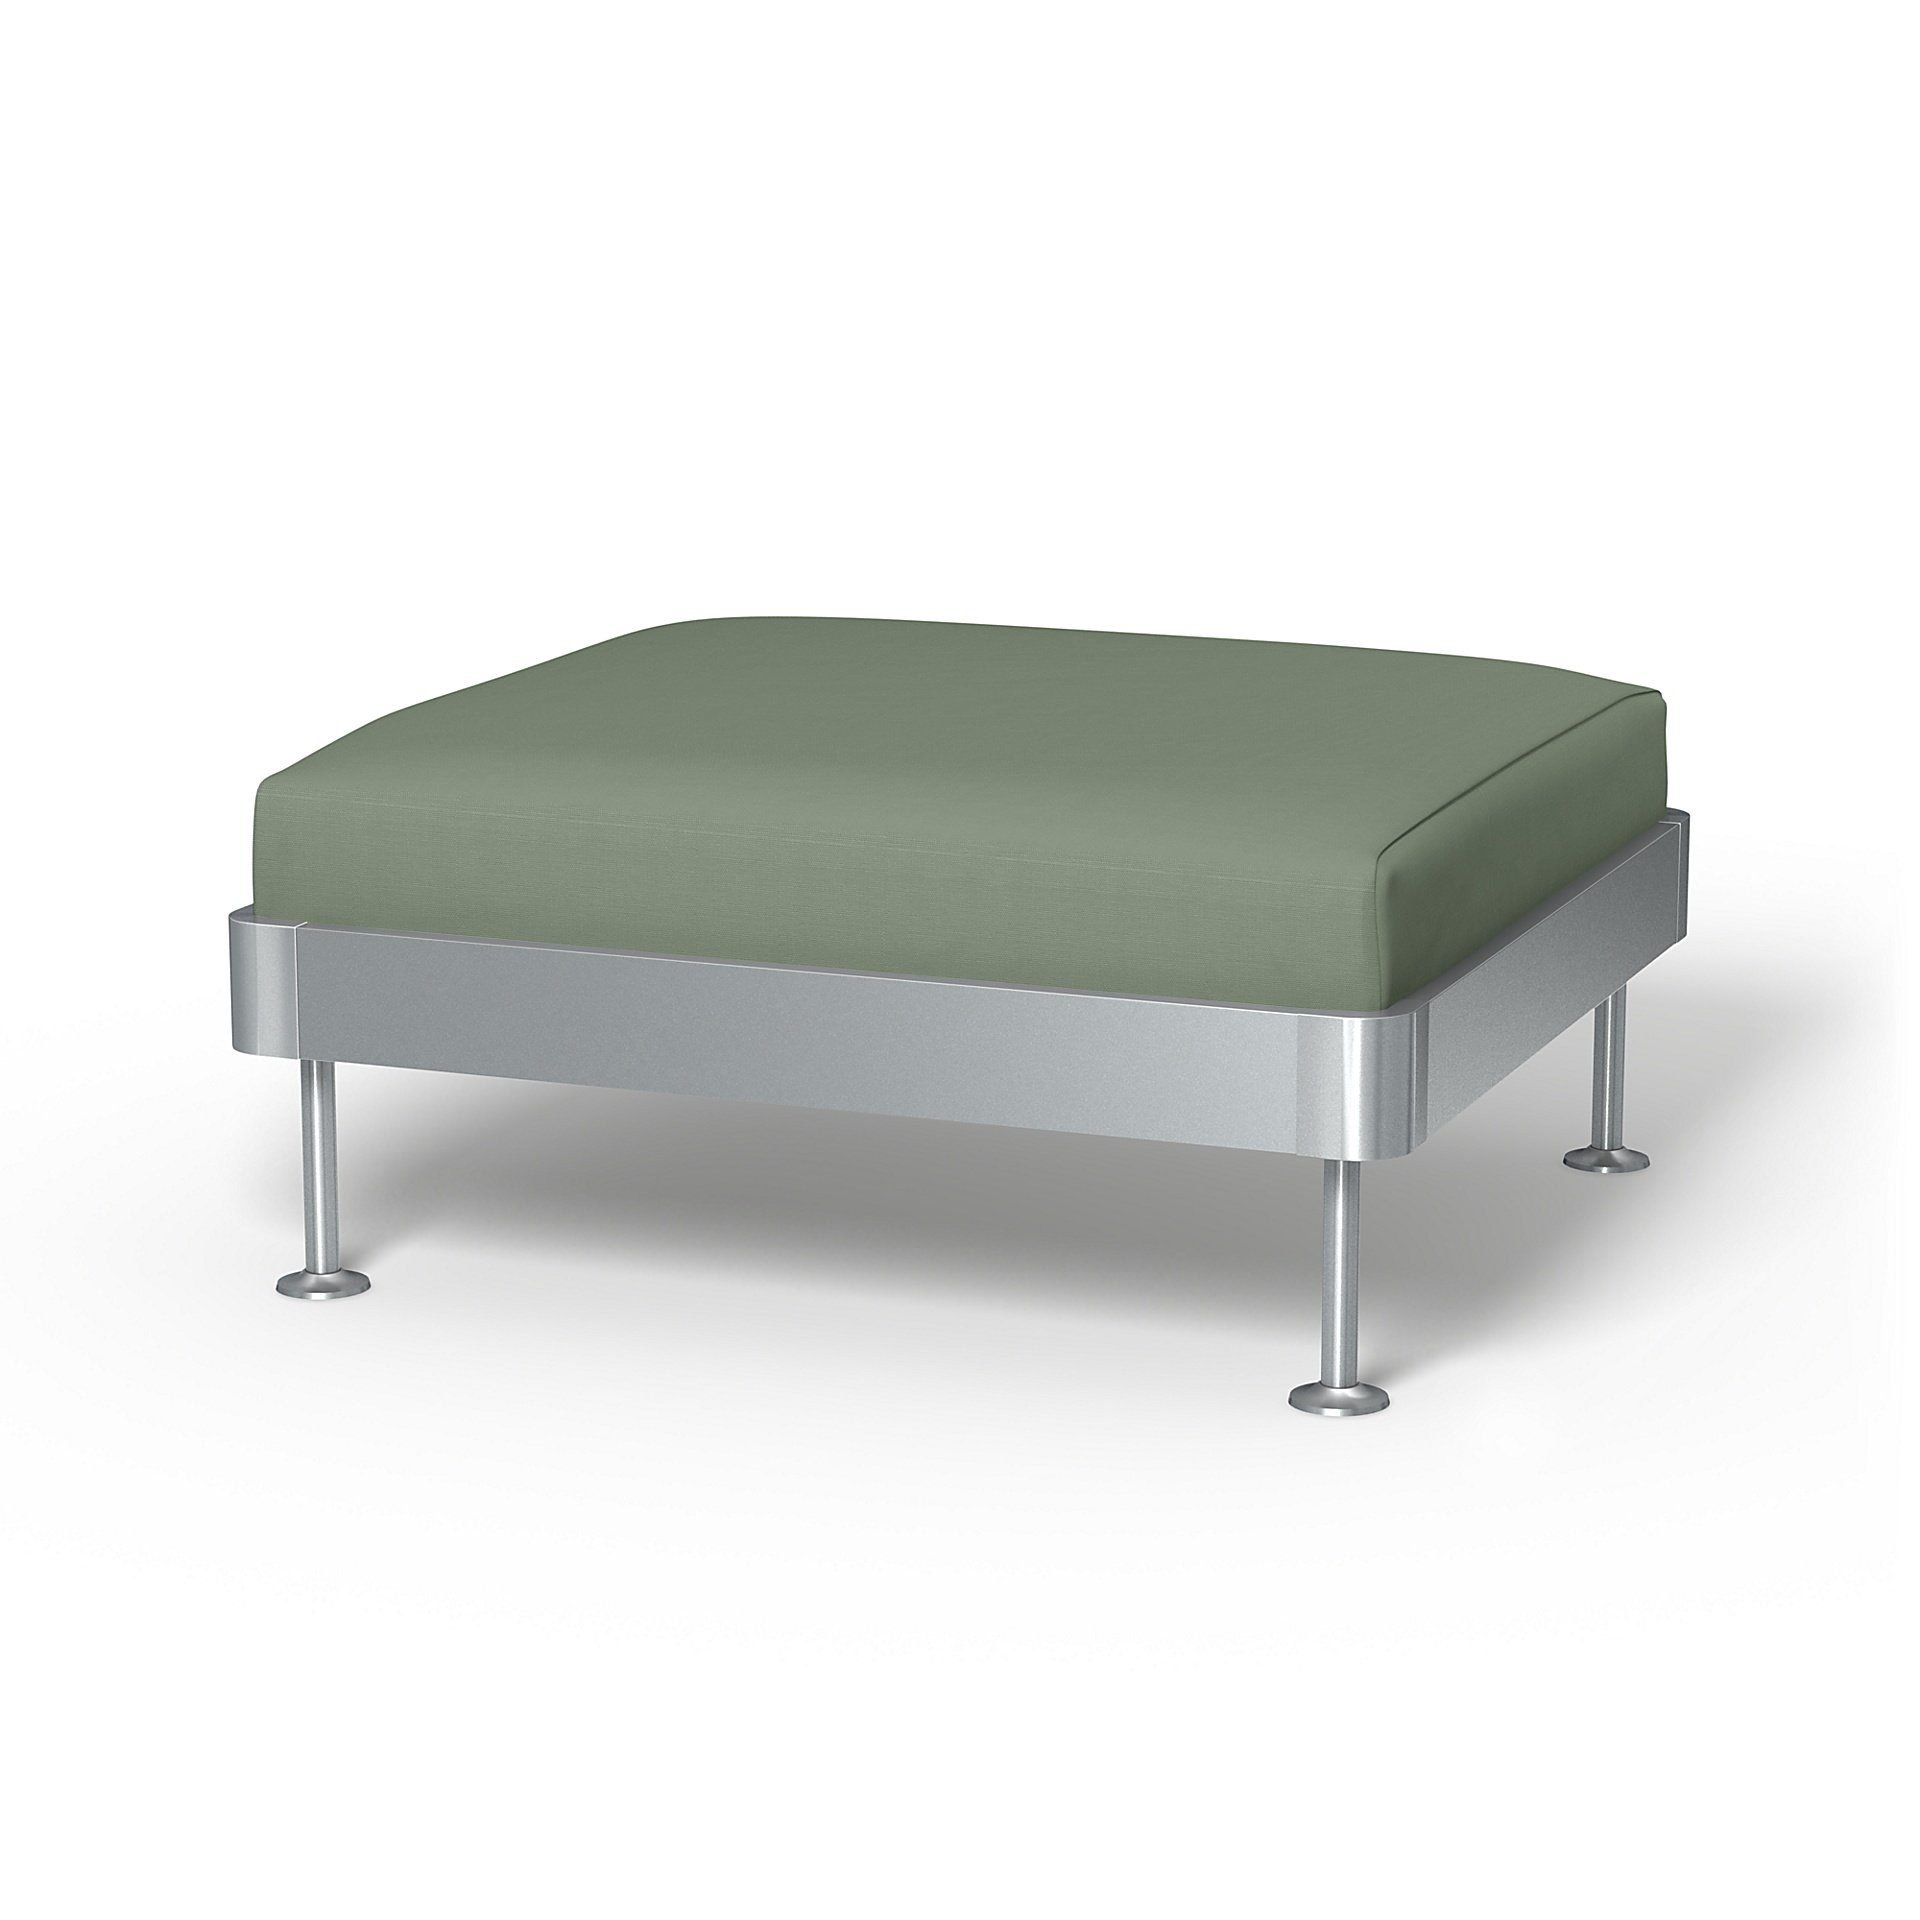 IKEA - Delaktig 1 Seat Platform Cover, Seagrass, Cotton - Bemz